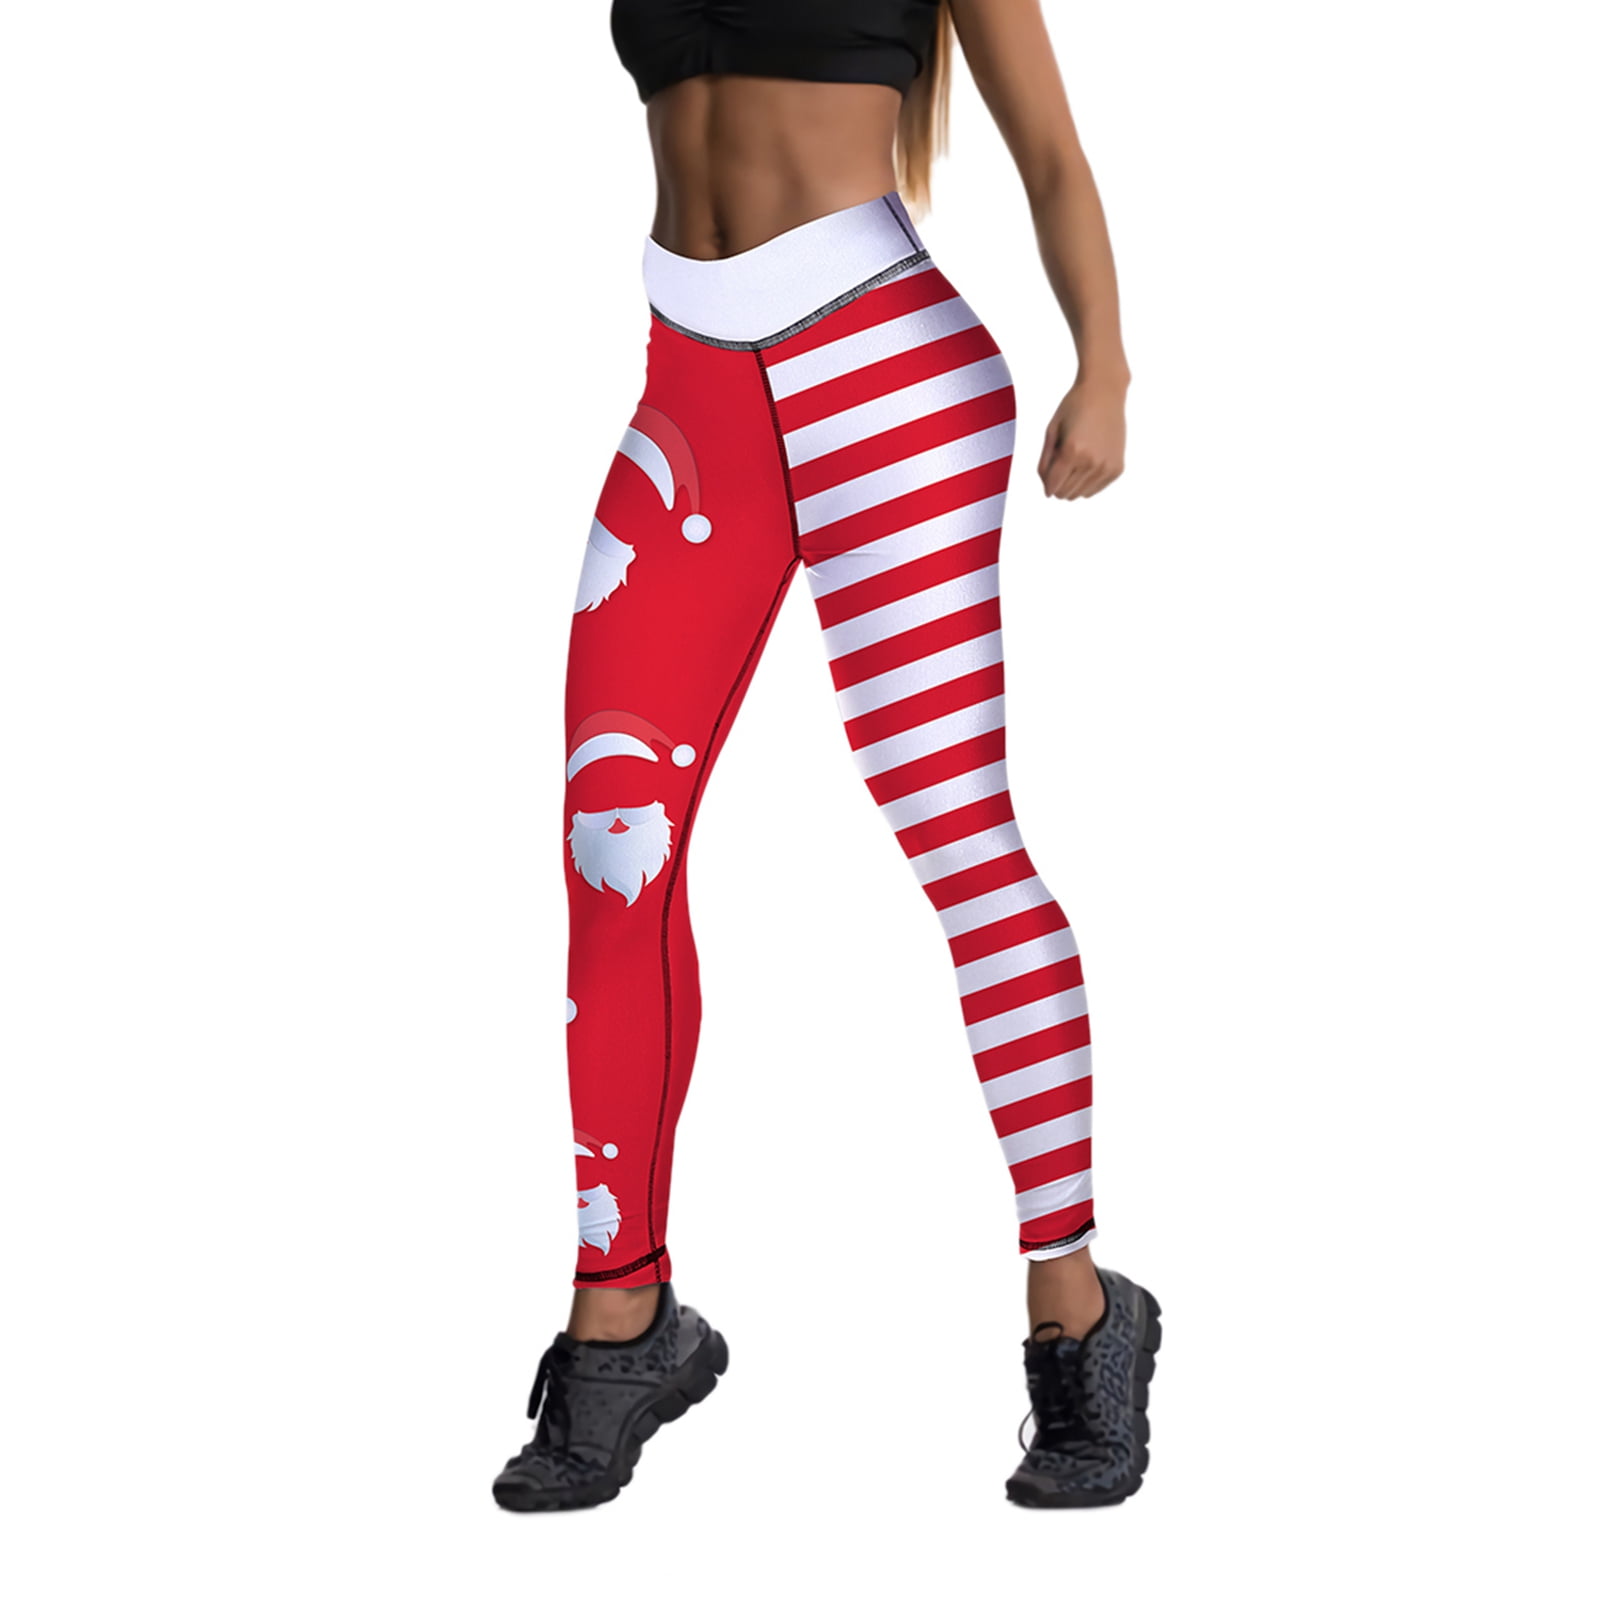 Croatia World Cup Red Digital Printing Leggings Tights Yoga Workout Pants 